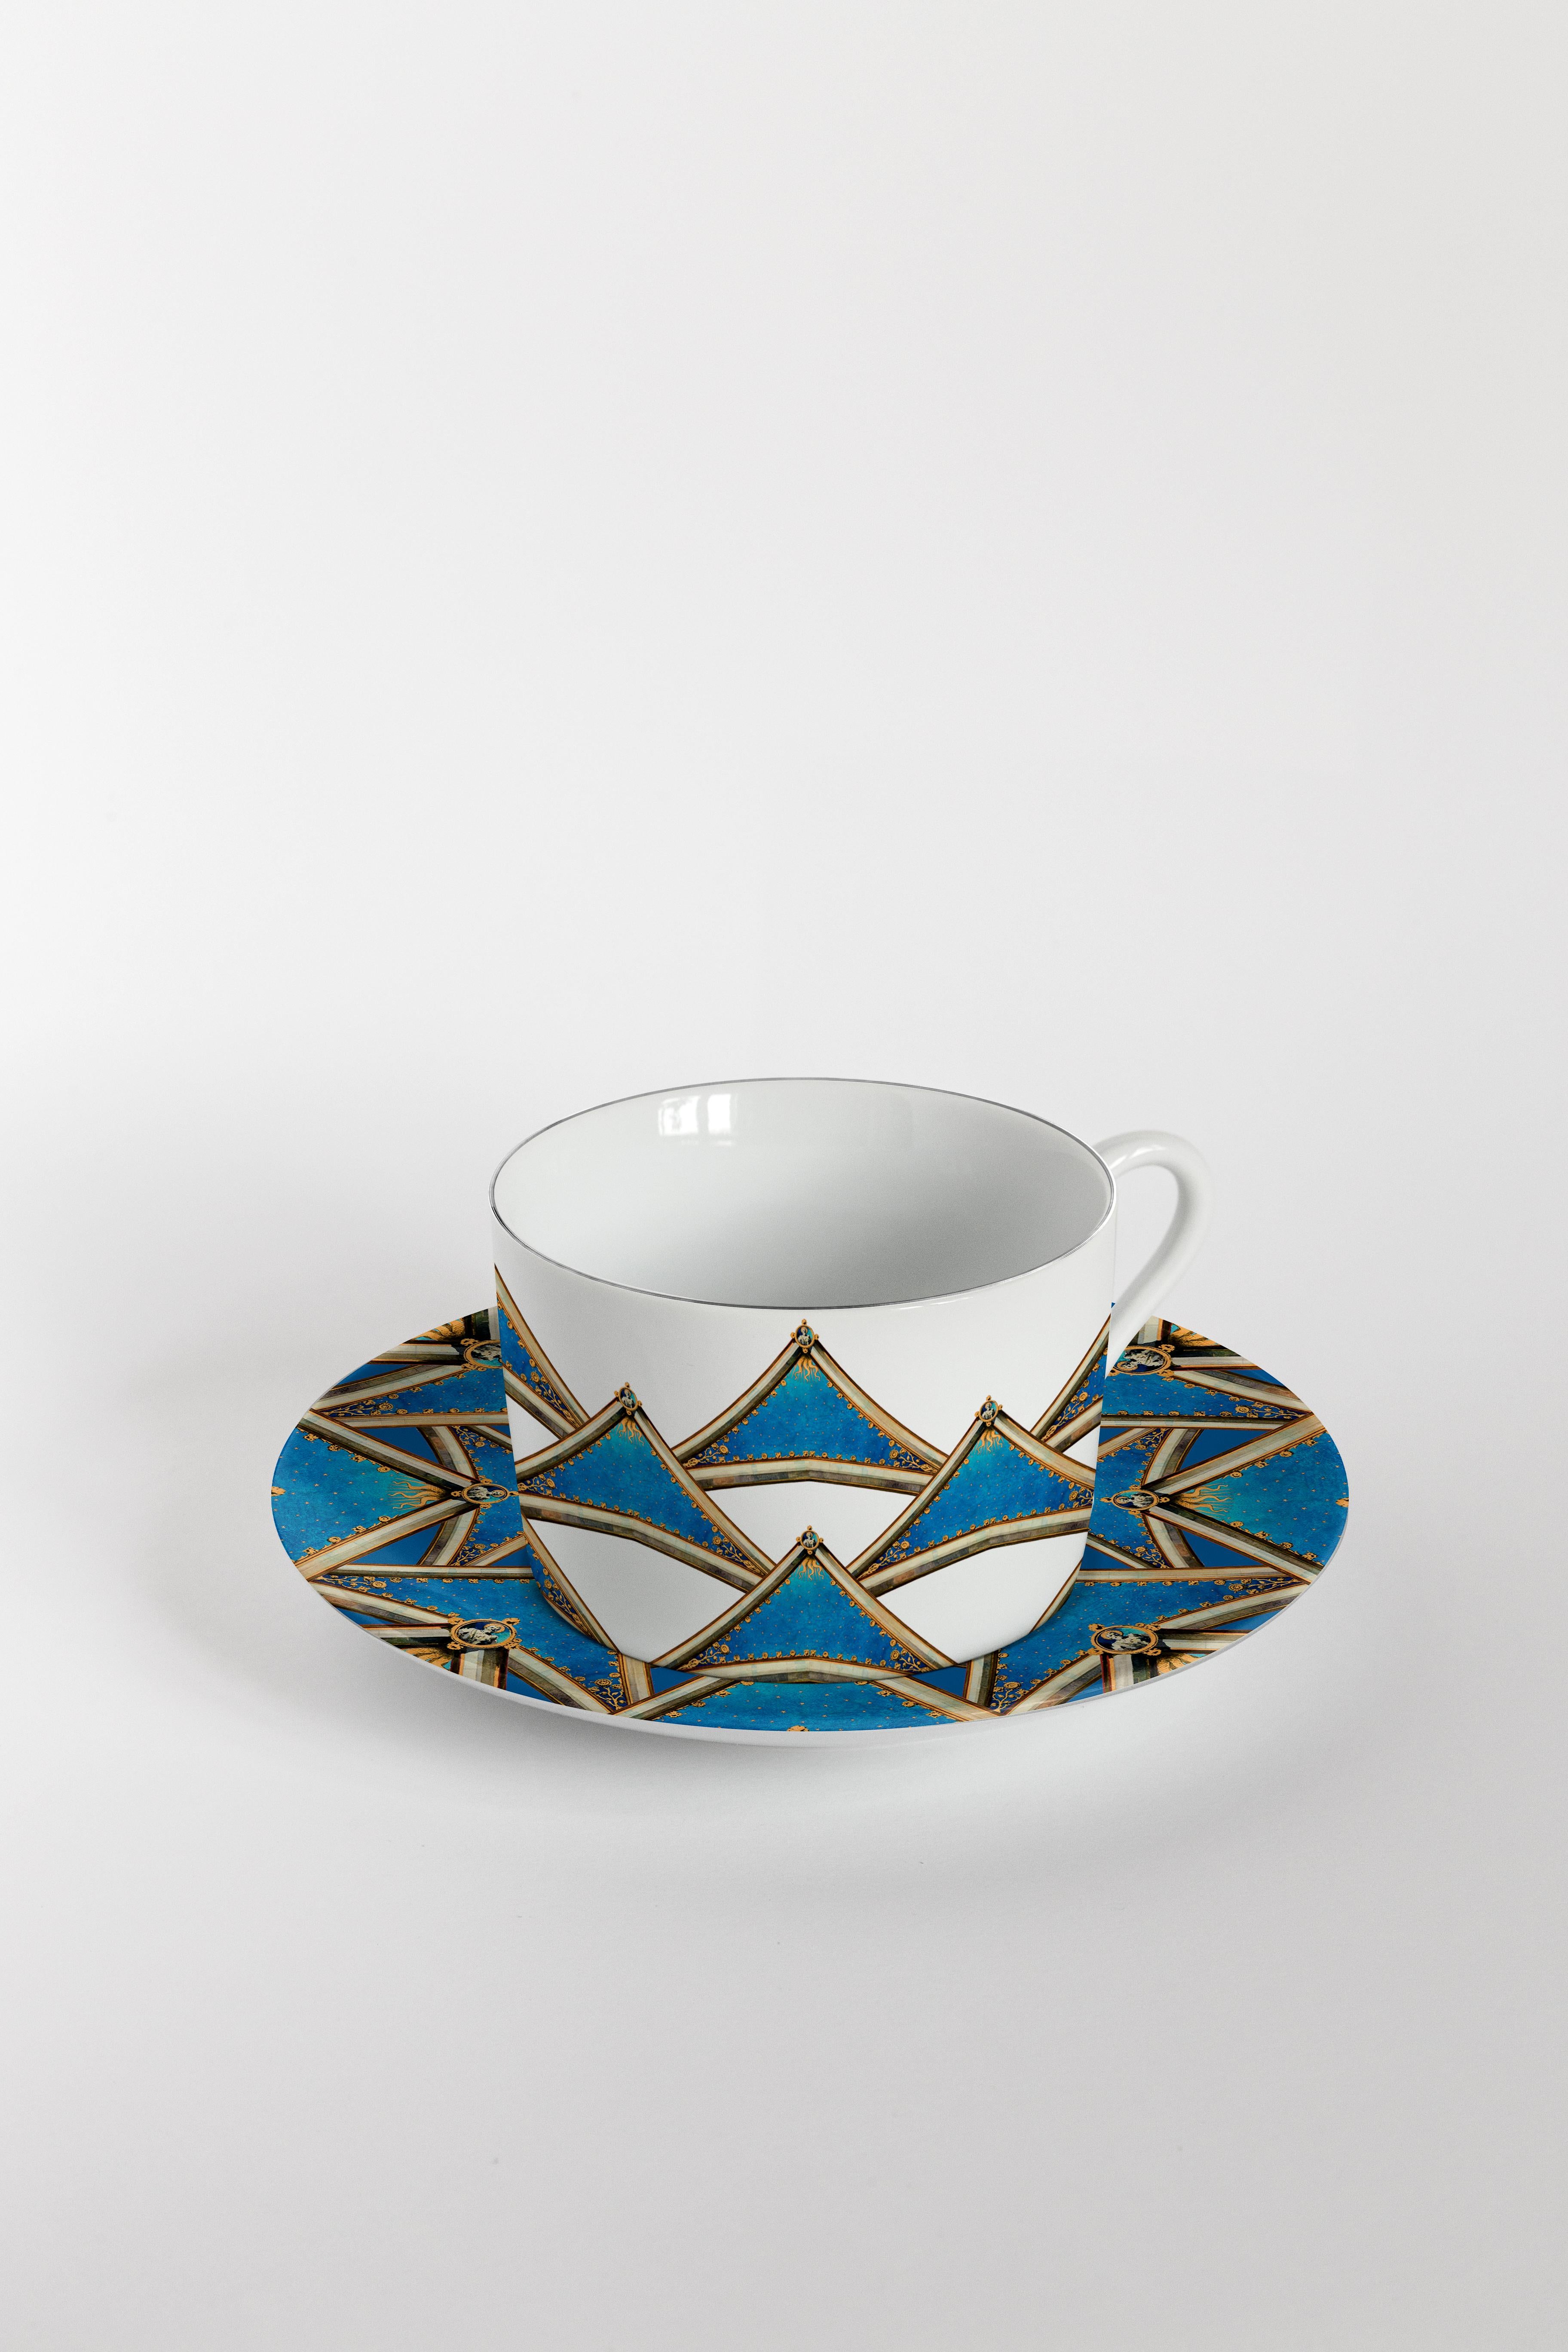 Italian Le Volte Celesti, Six Contemporary Decorated Tea Cups with Plates For Sale